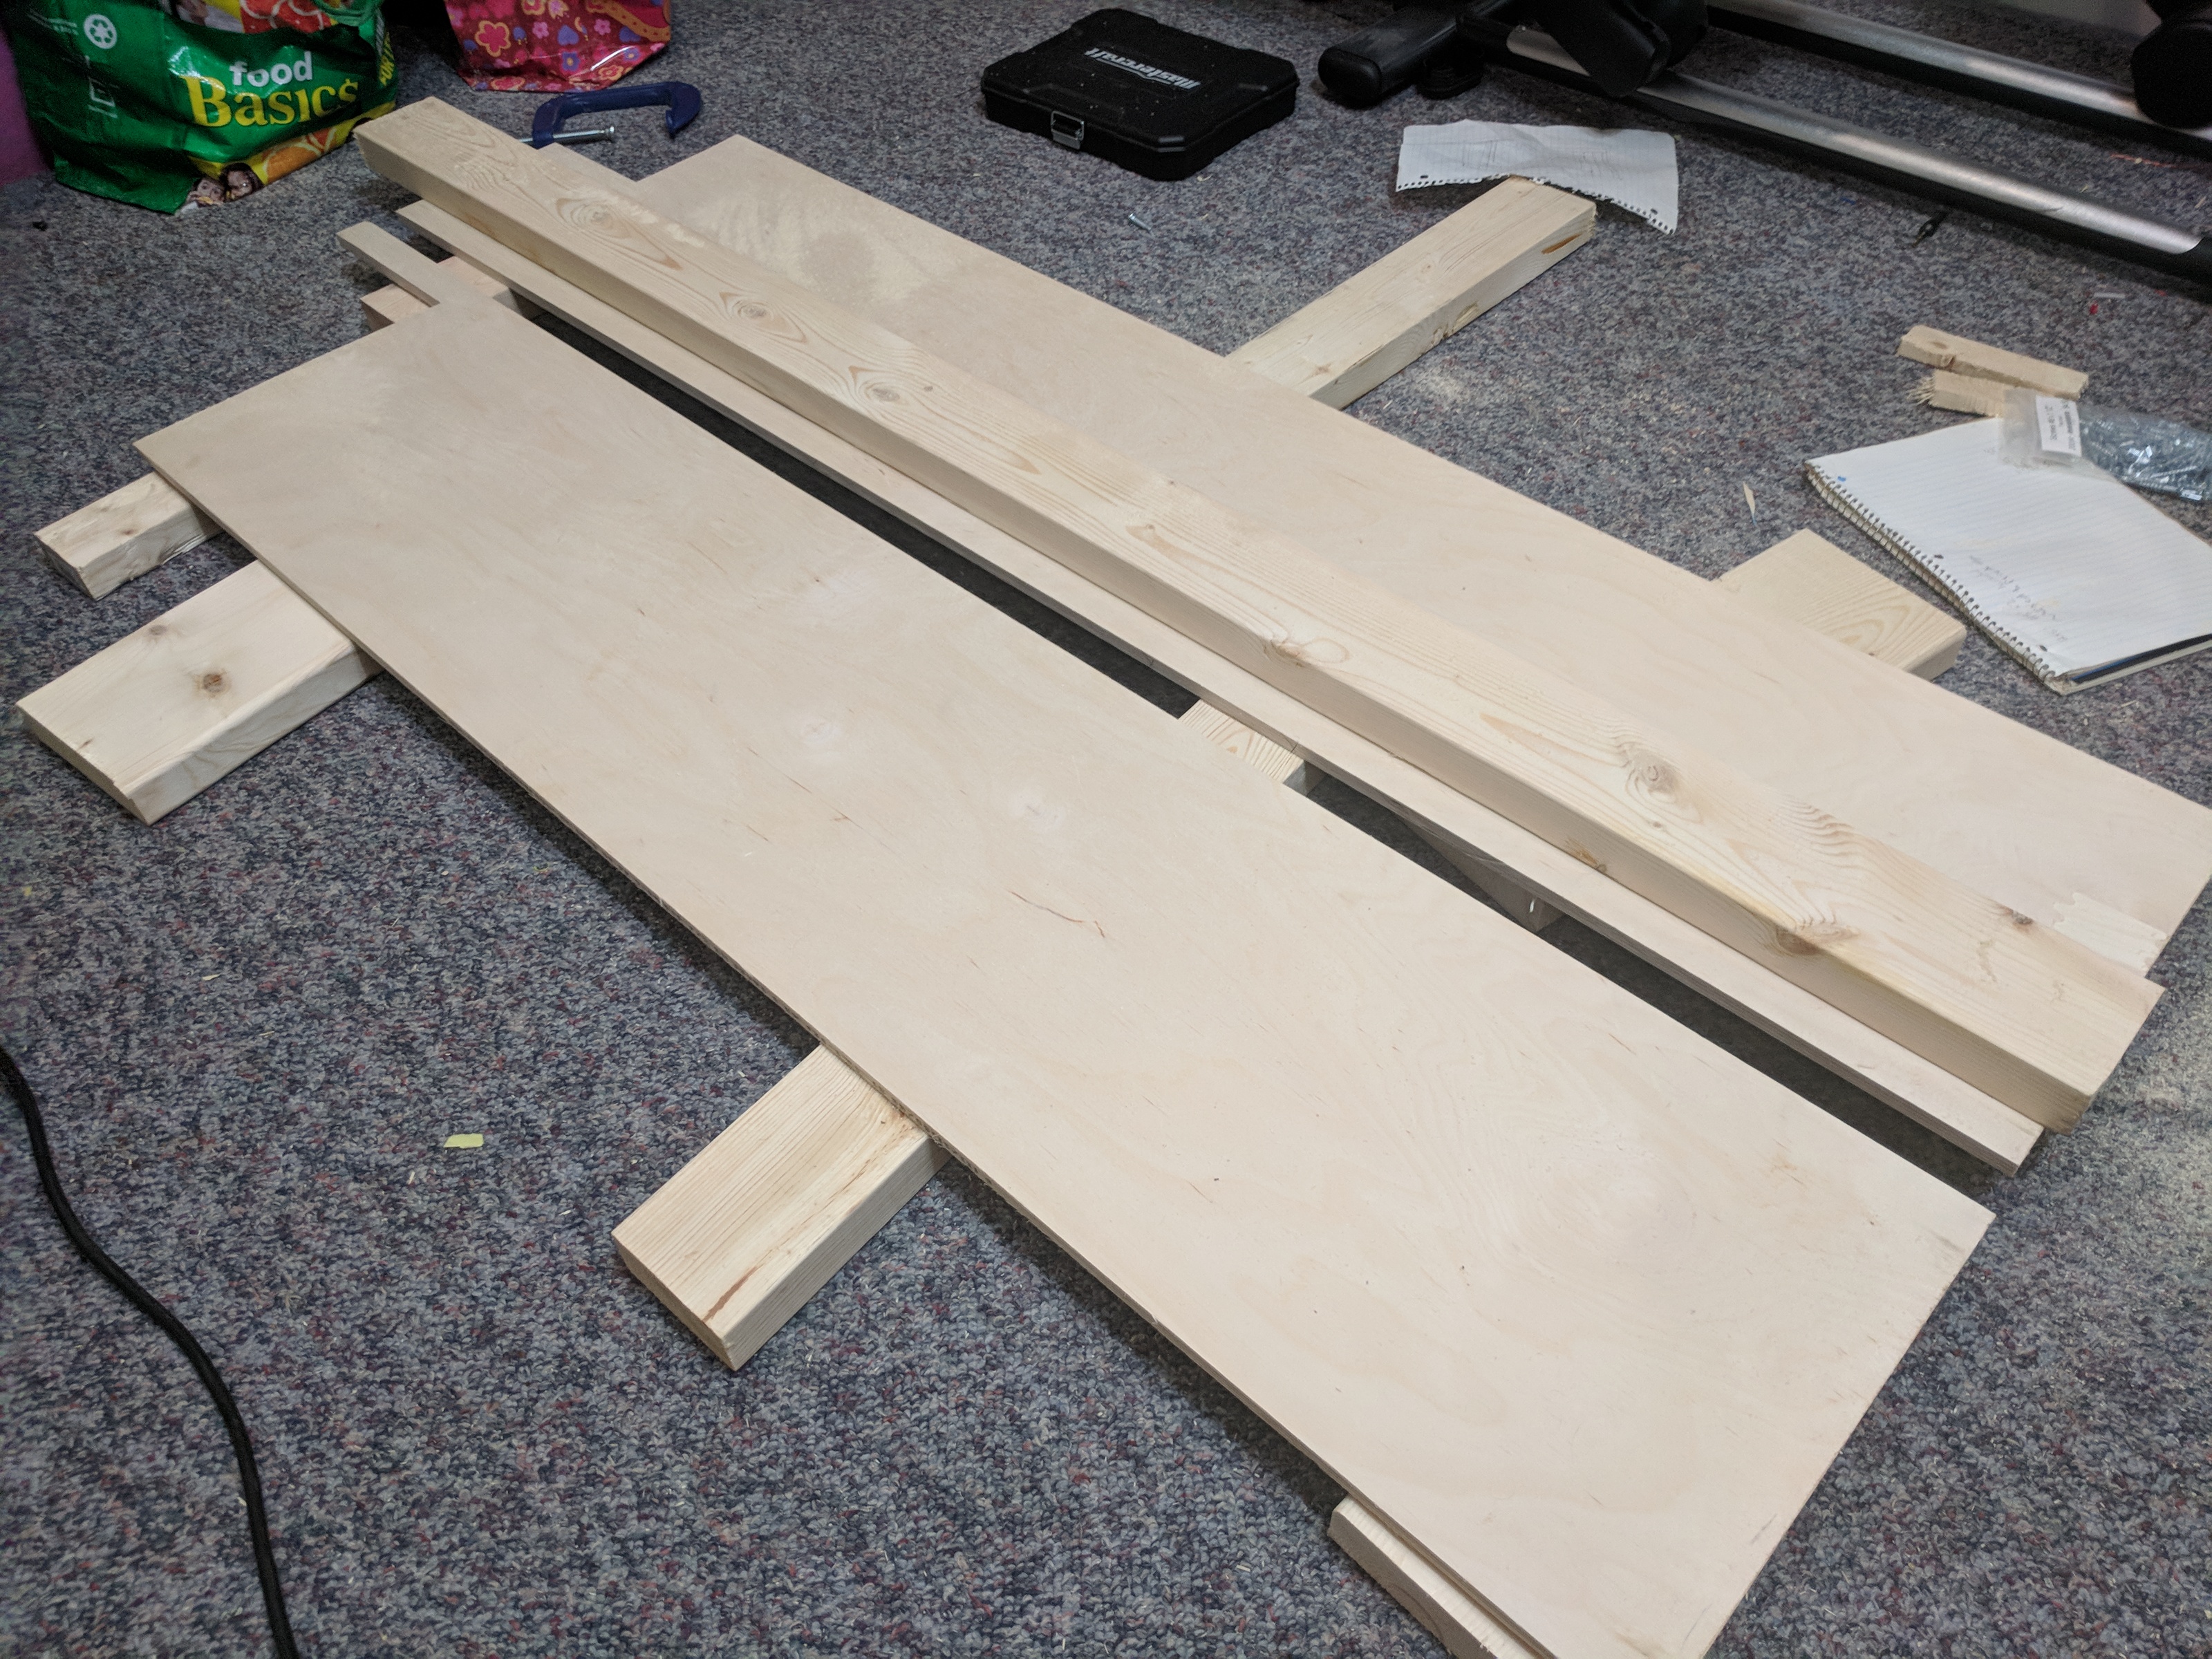 Cuting plywood with a circular saw. 2x4 as my 'straight' edge.